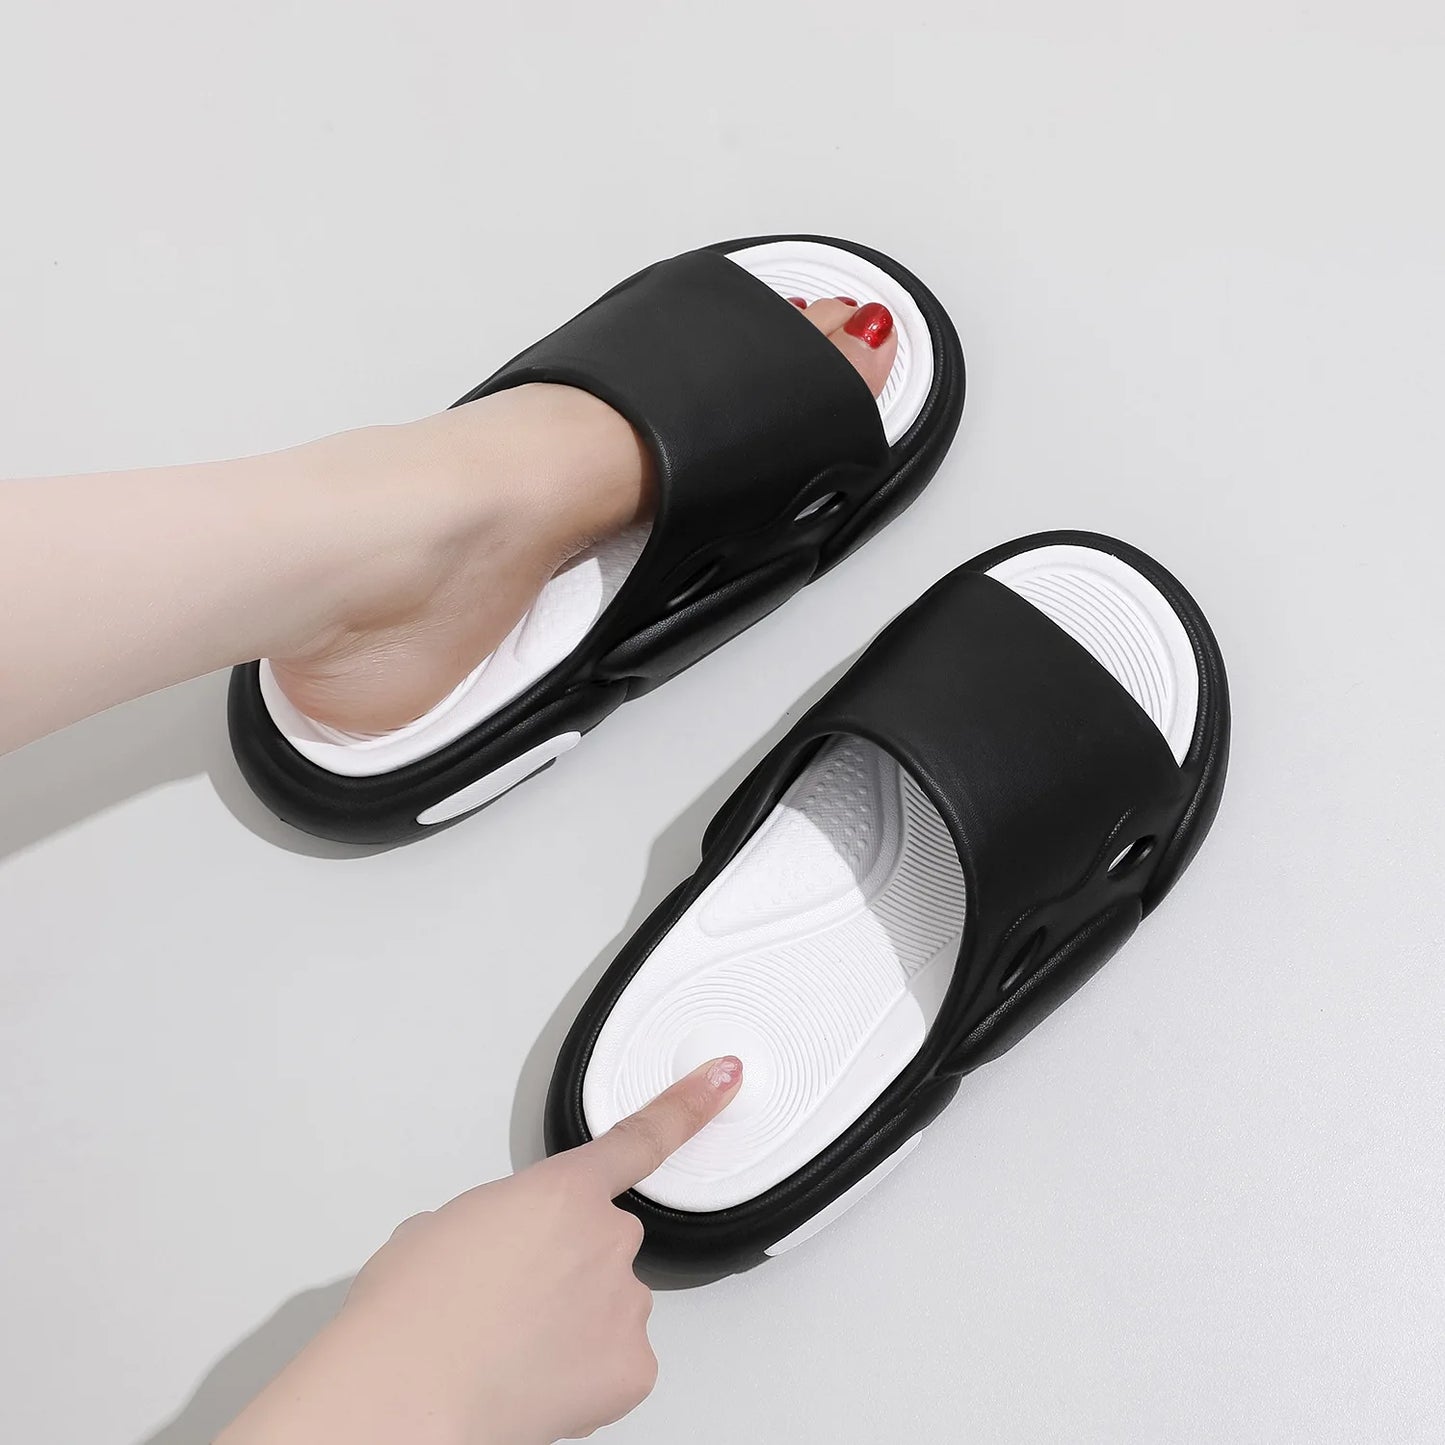 KIDMI Women Platform Flat Slippers Fashion Women EVA Slippers 2024 Summer Beach Slippers Home Bathroom Sandals New Unisex Shoes